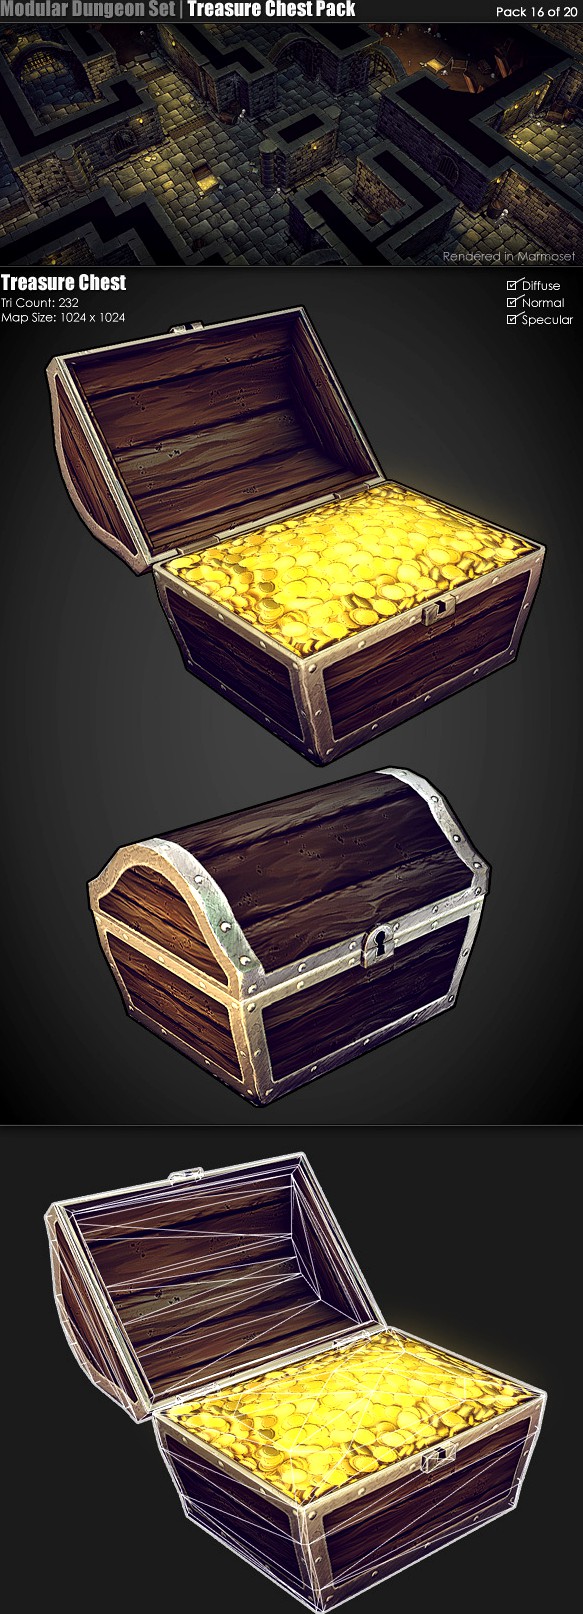 Modular Dungeon Set|Treasure Chest Pack (16 of 20)